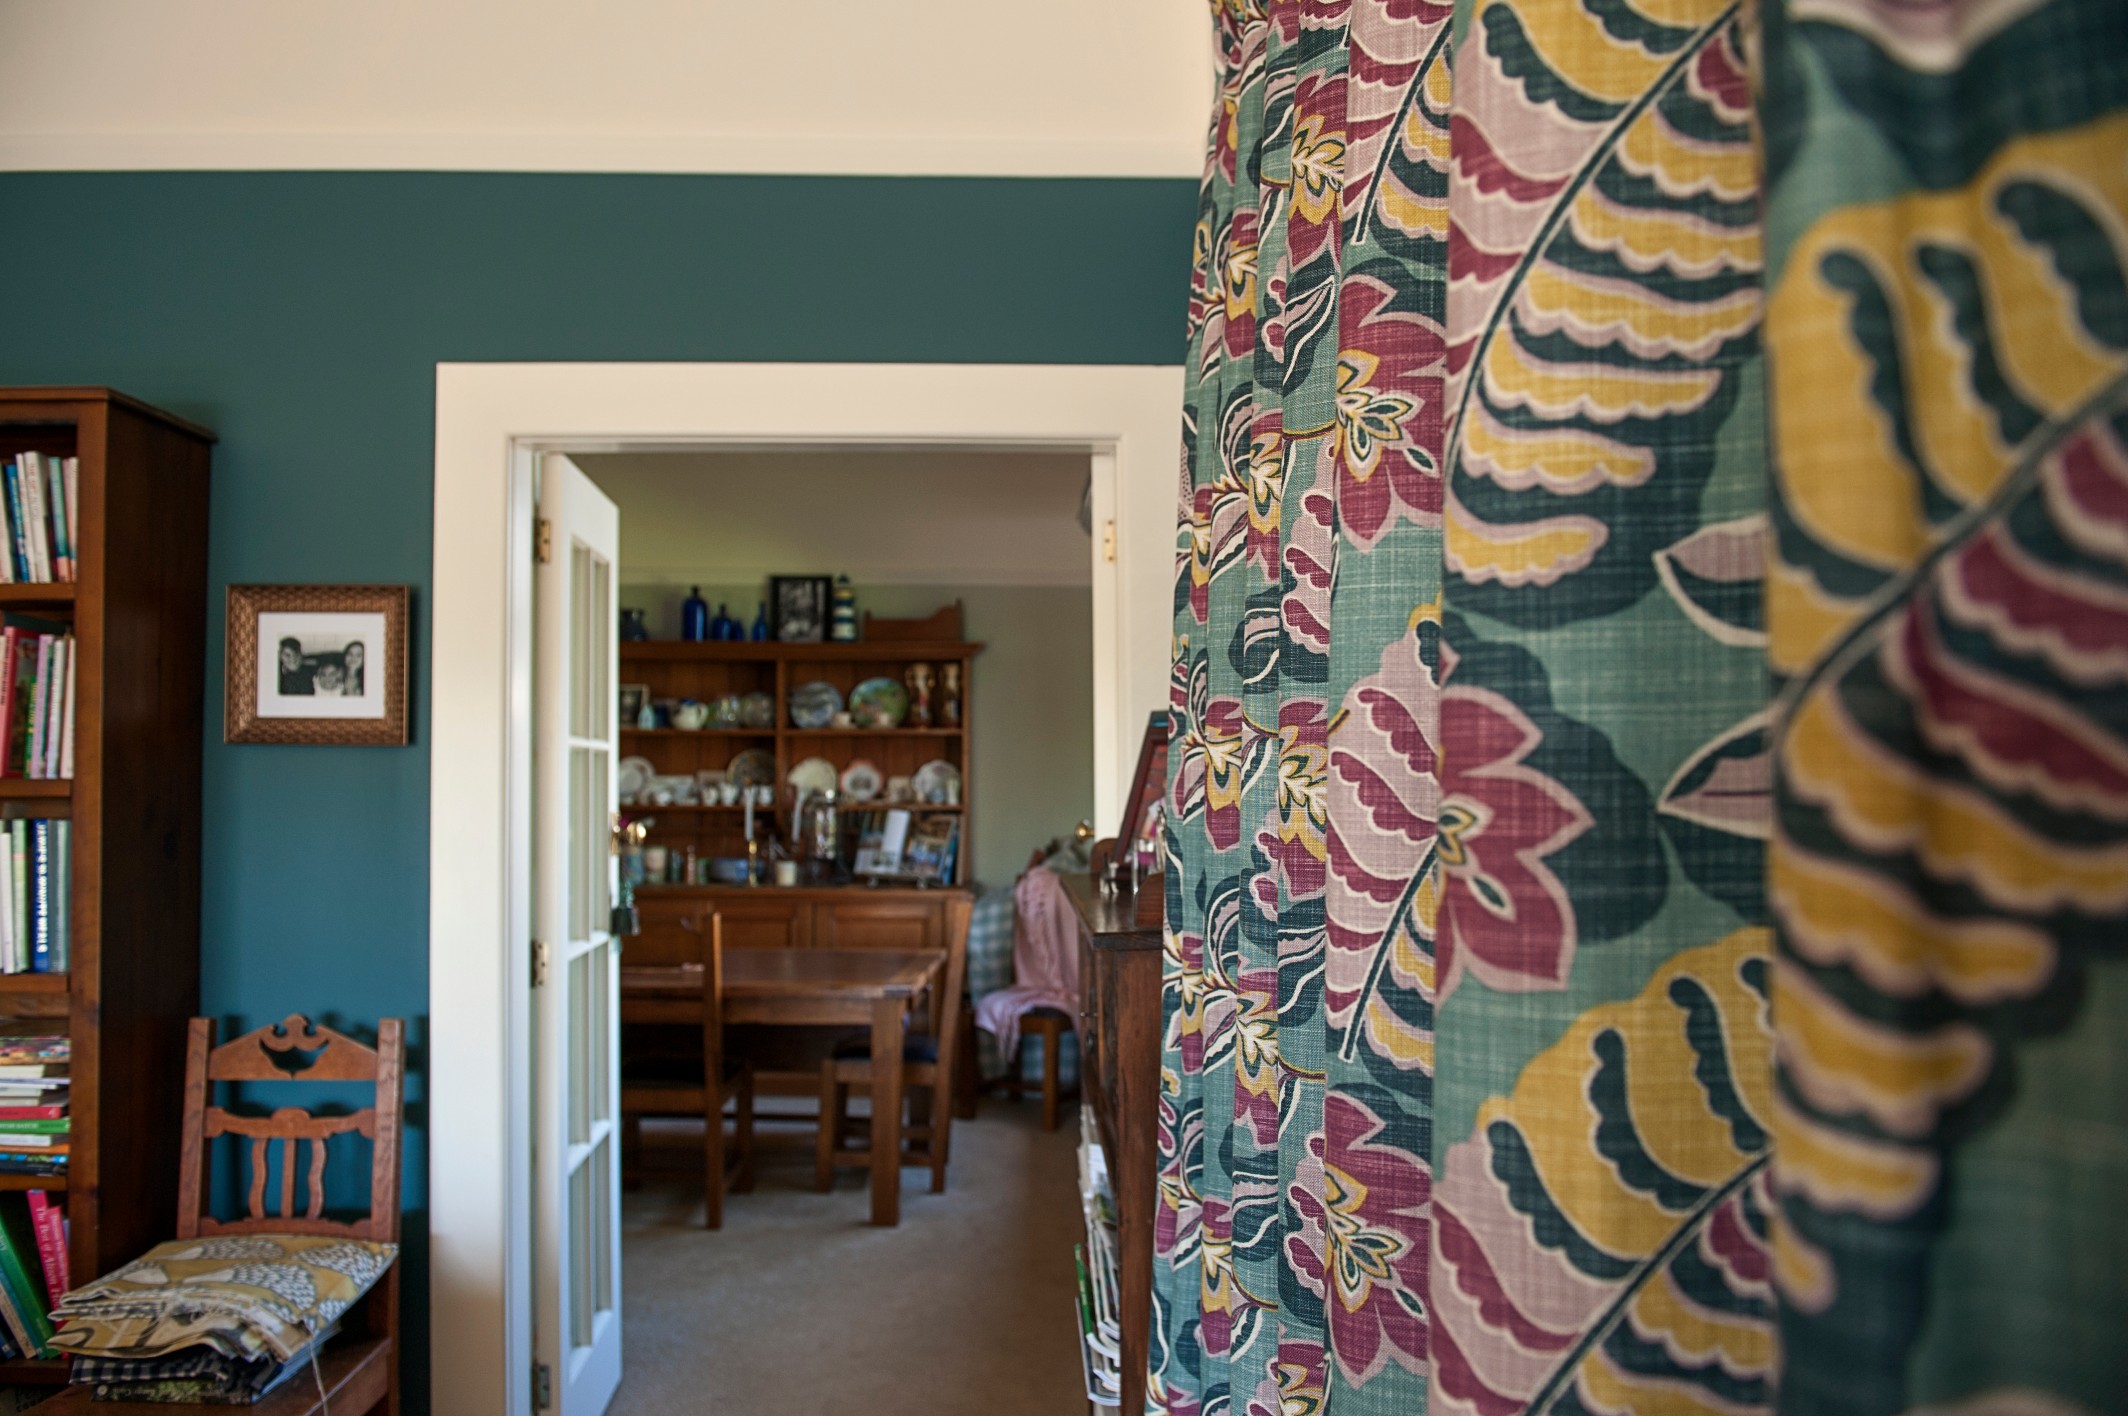  Sanderson curtains enhance the deep walls colour